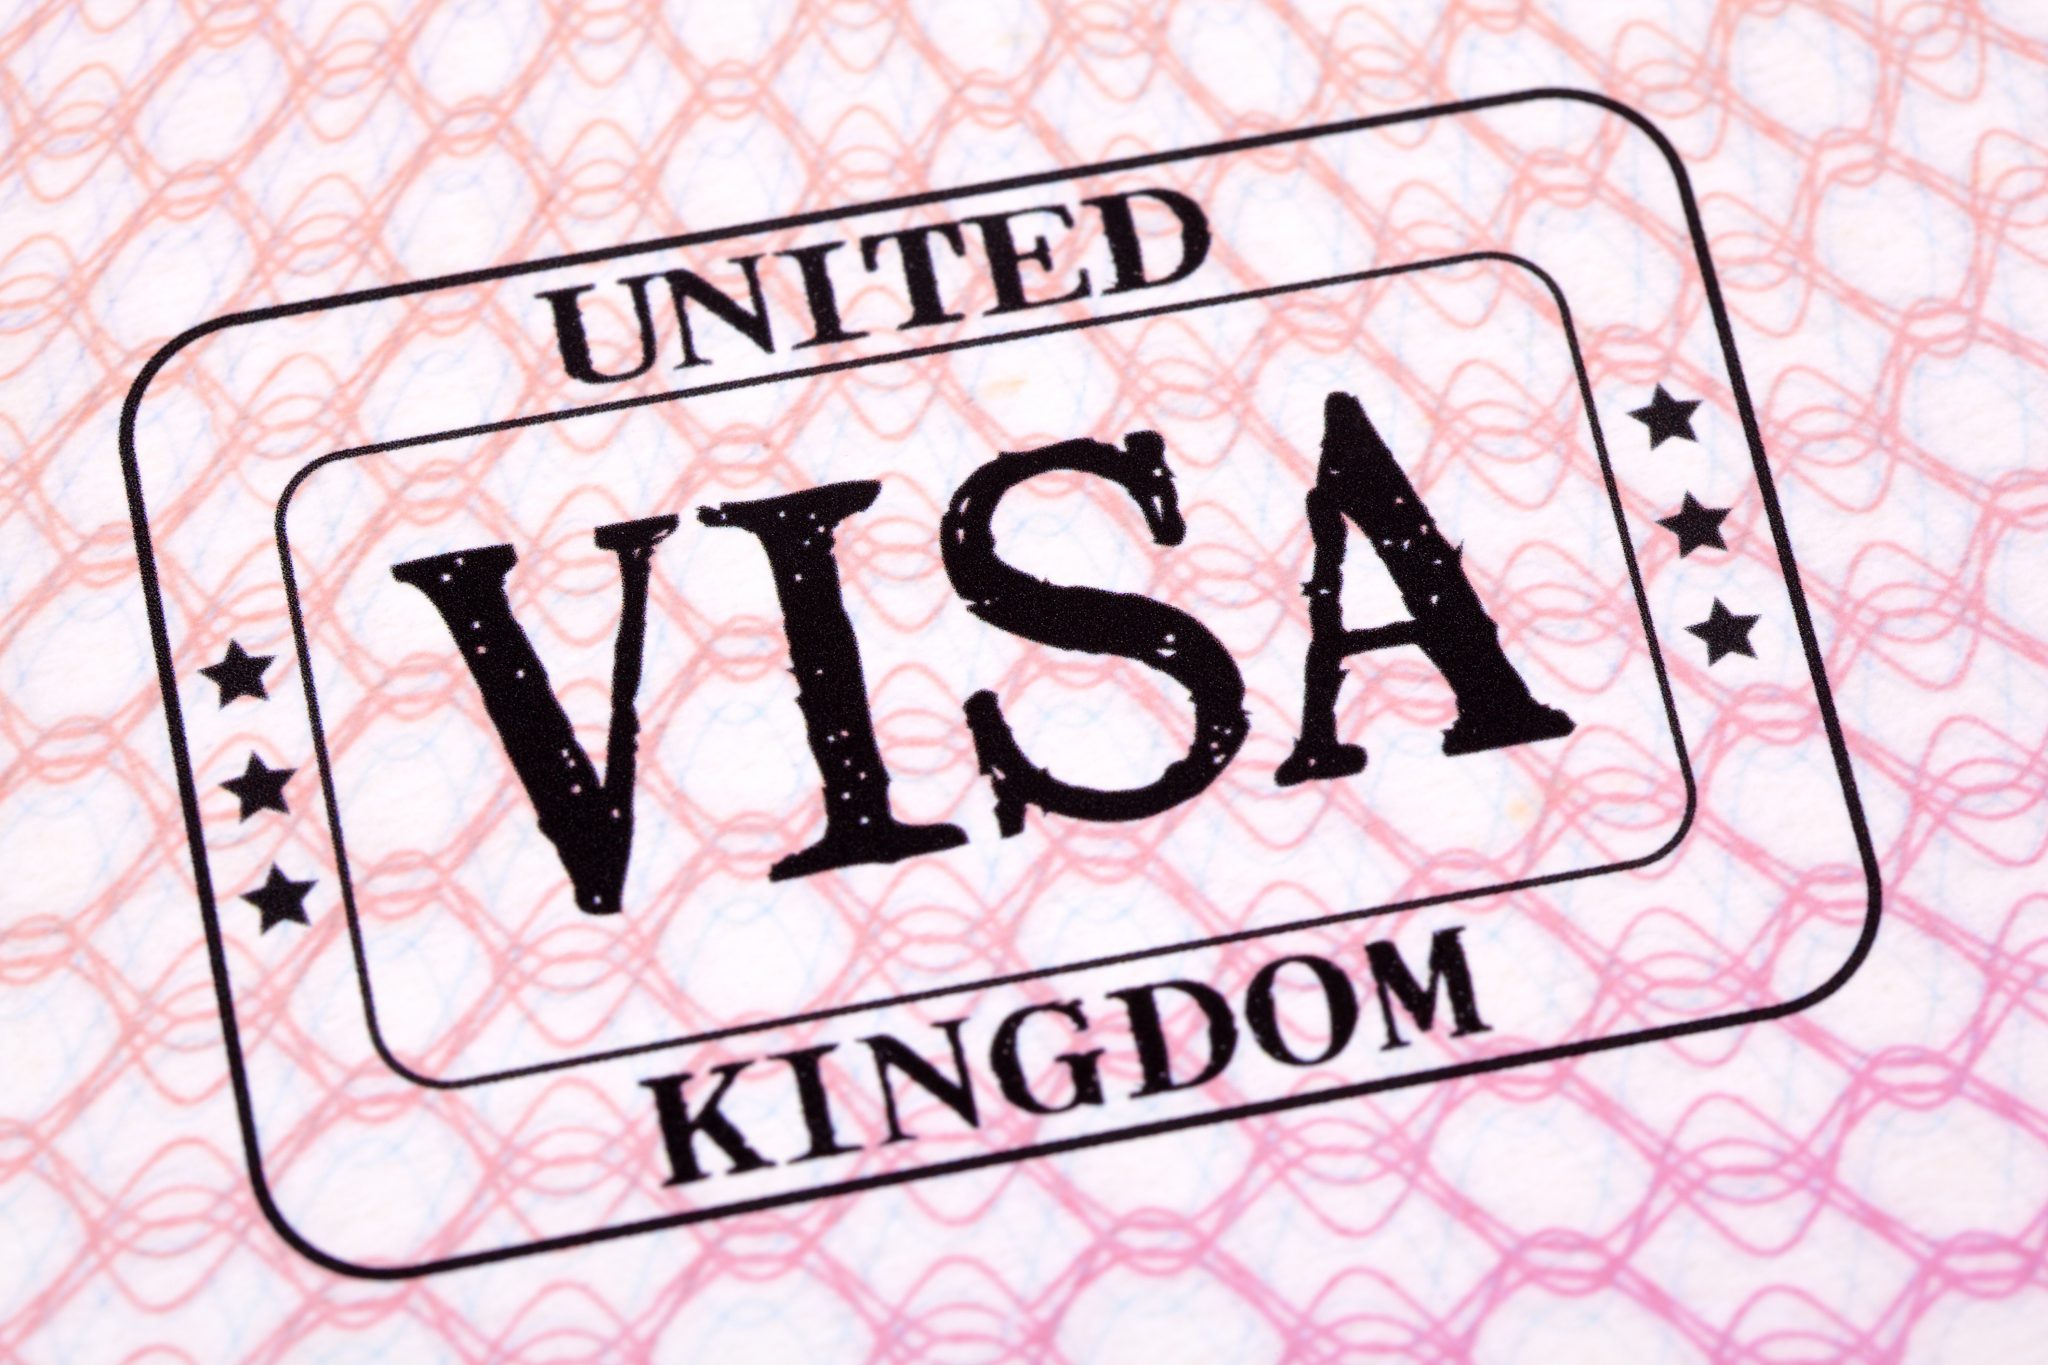 UK visa immigration stamp passport page close up